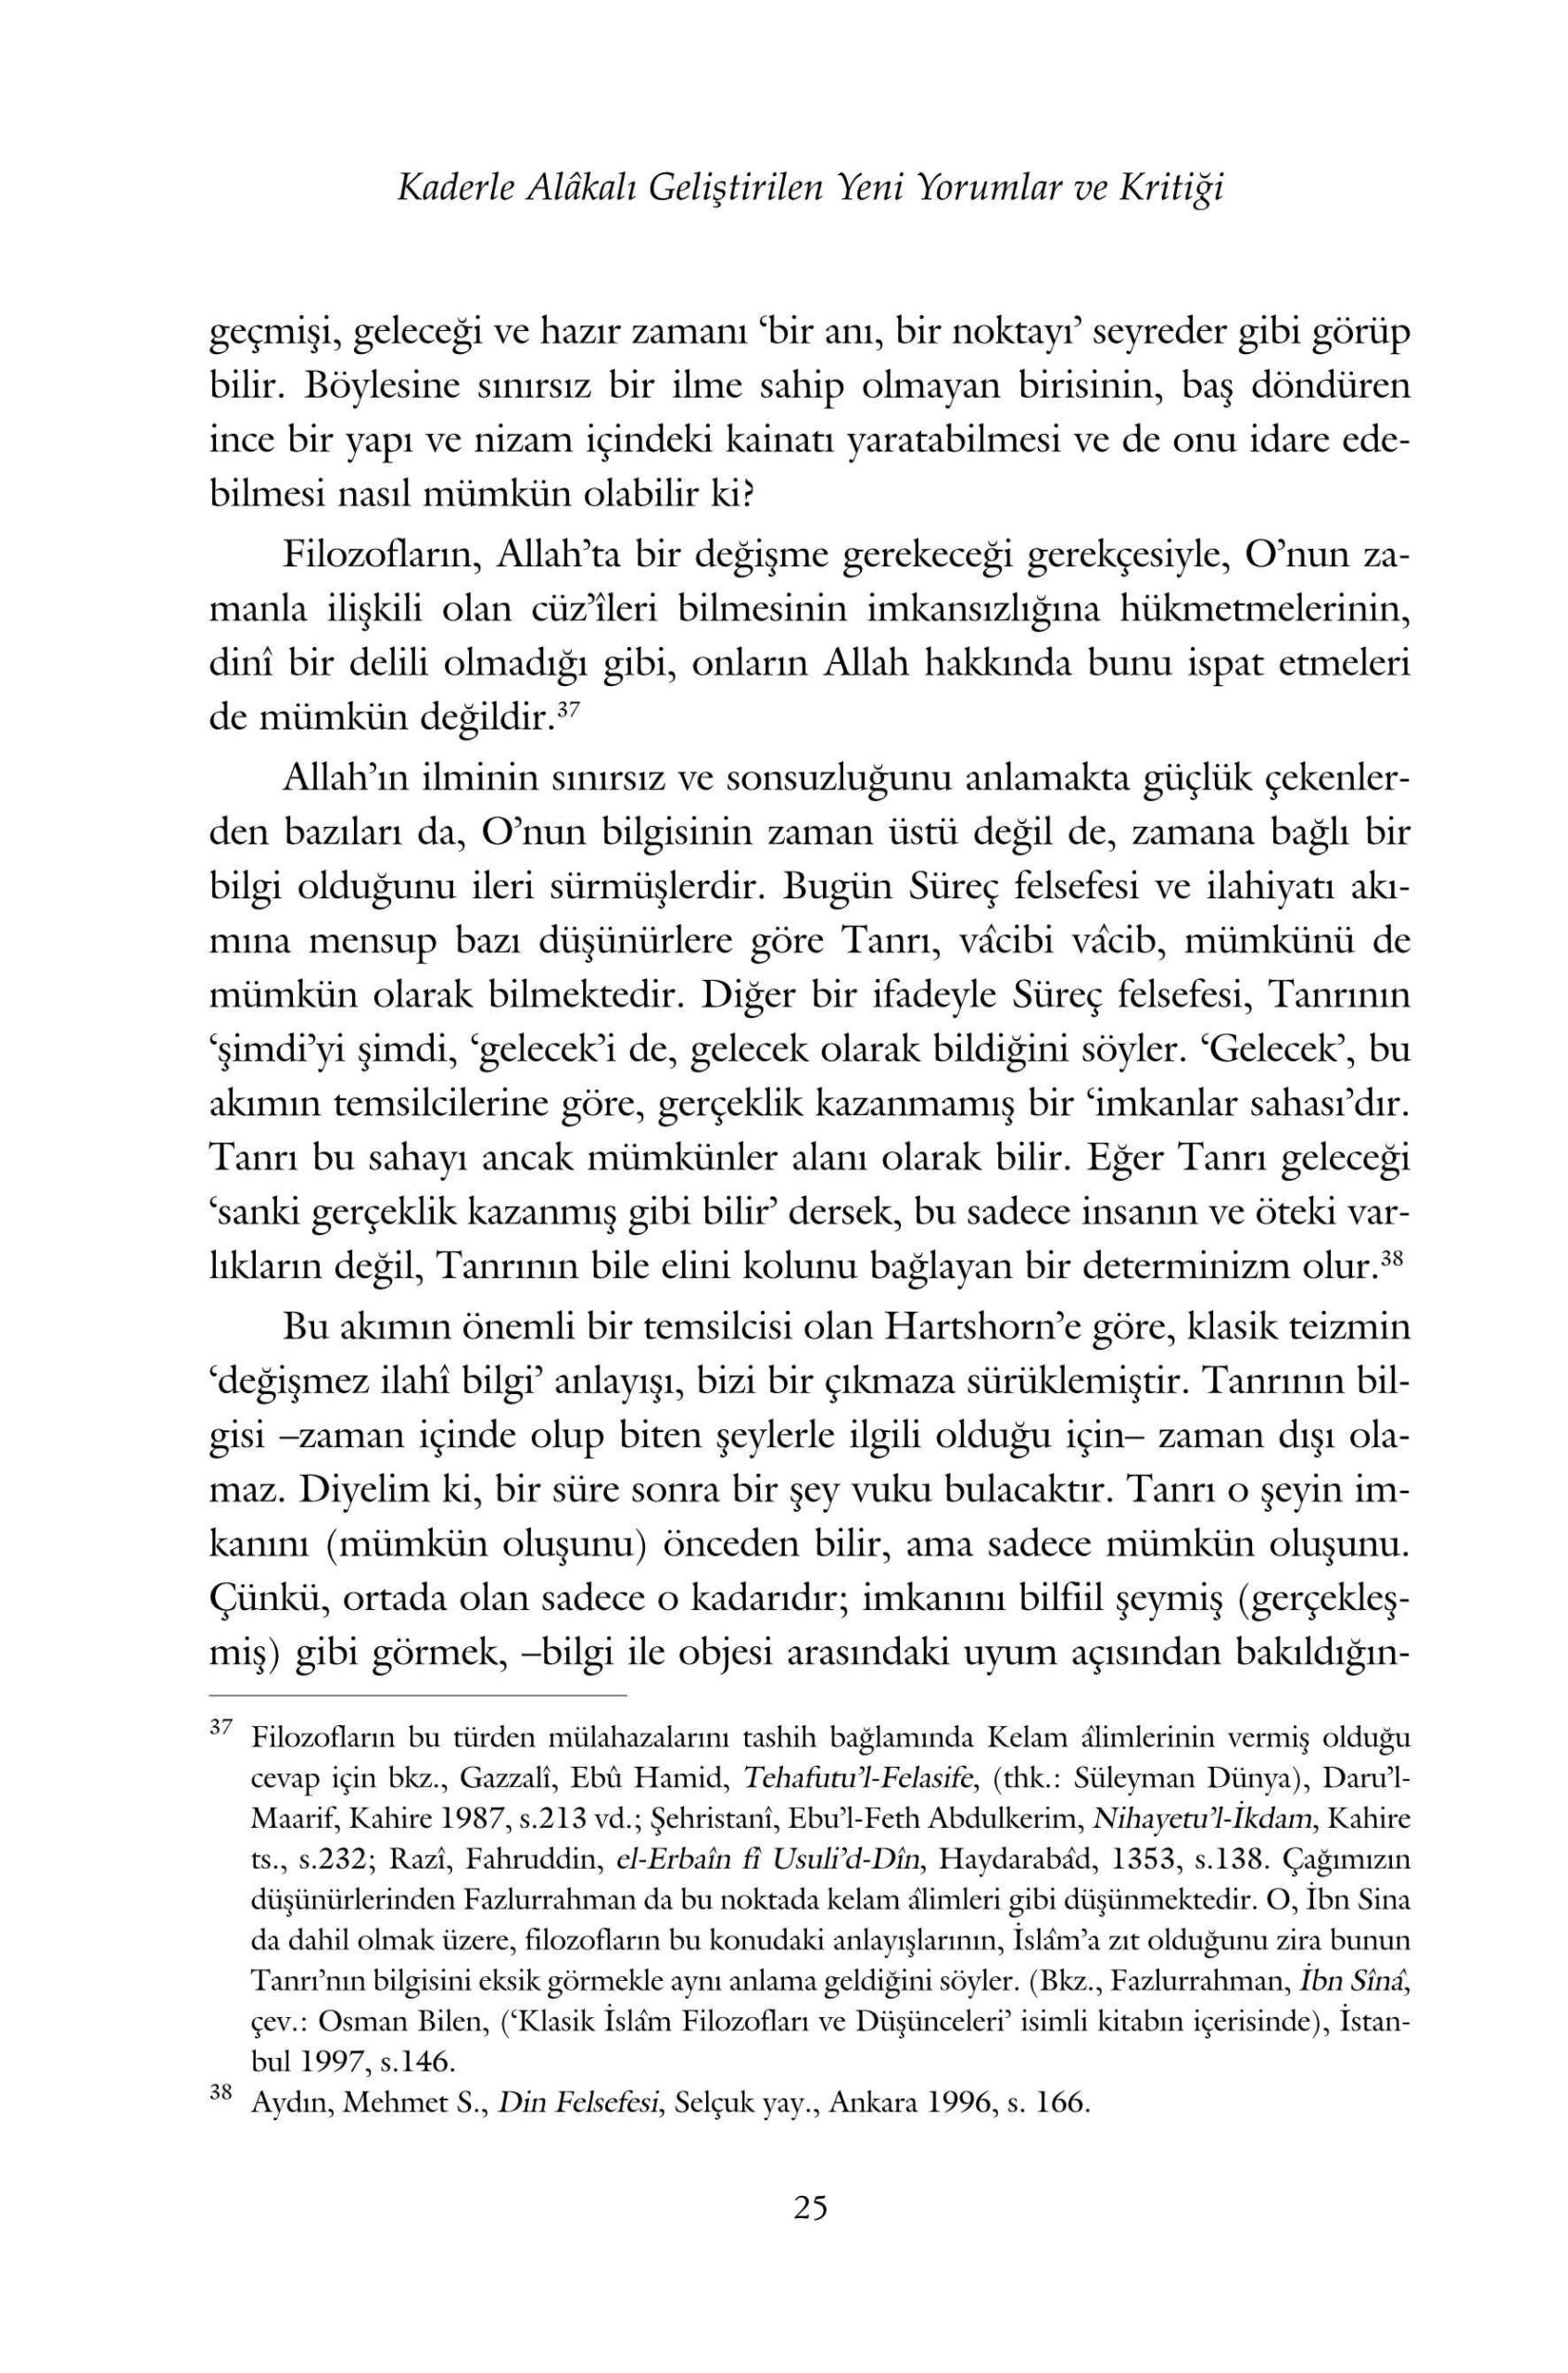 Yener Ozturk - Islam Inanci Etrafinda Yerli Yorumlar - IsikAkademiY.pdf, 247-Sayfa 